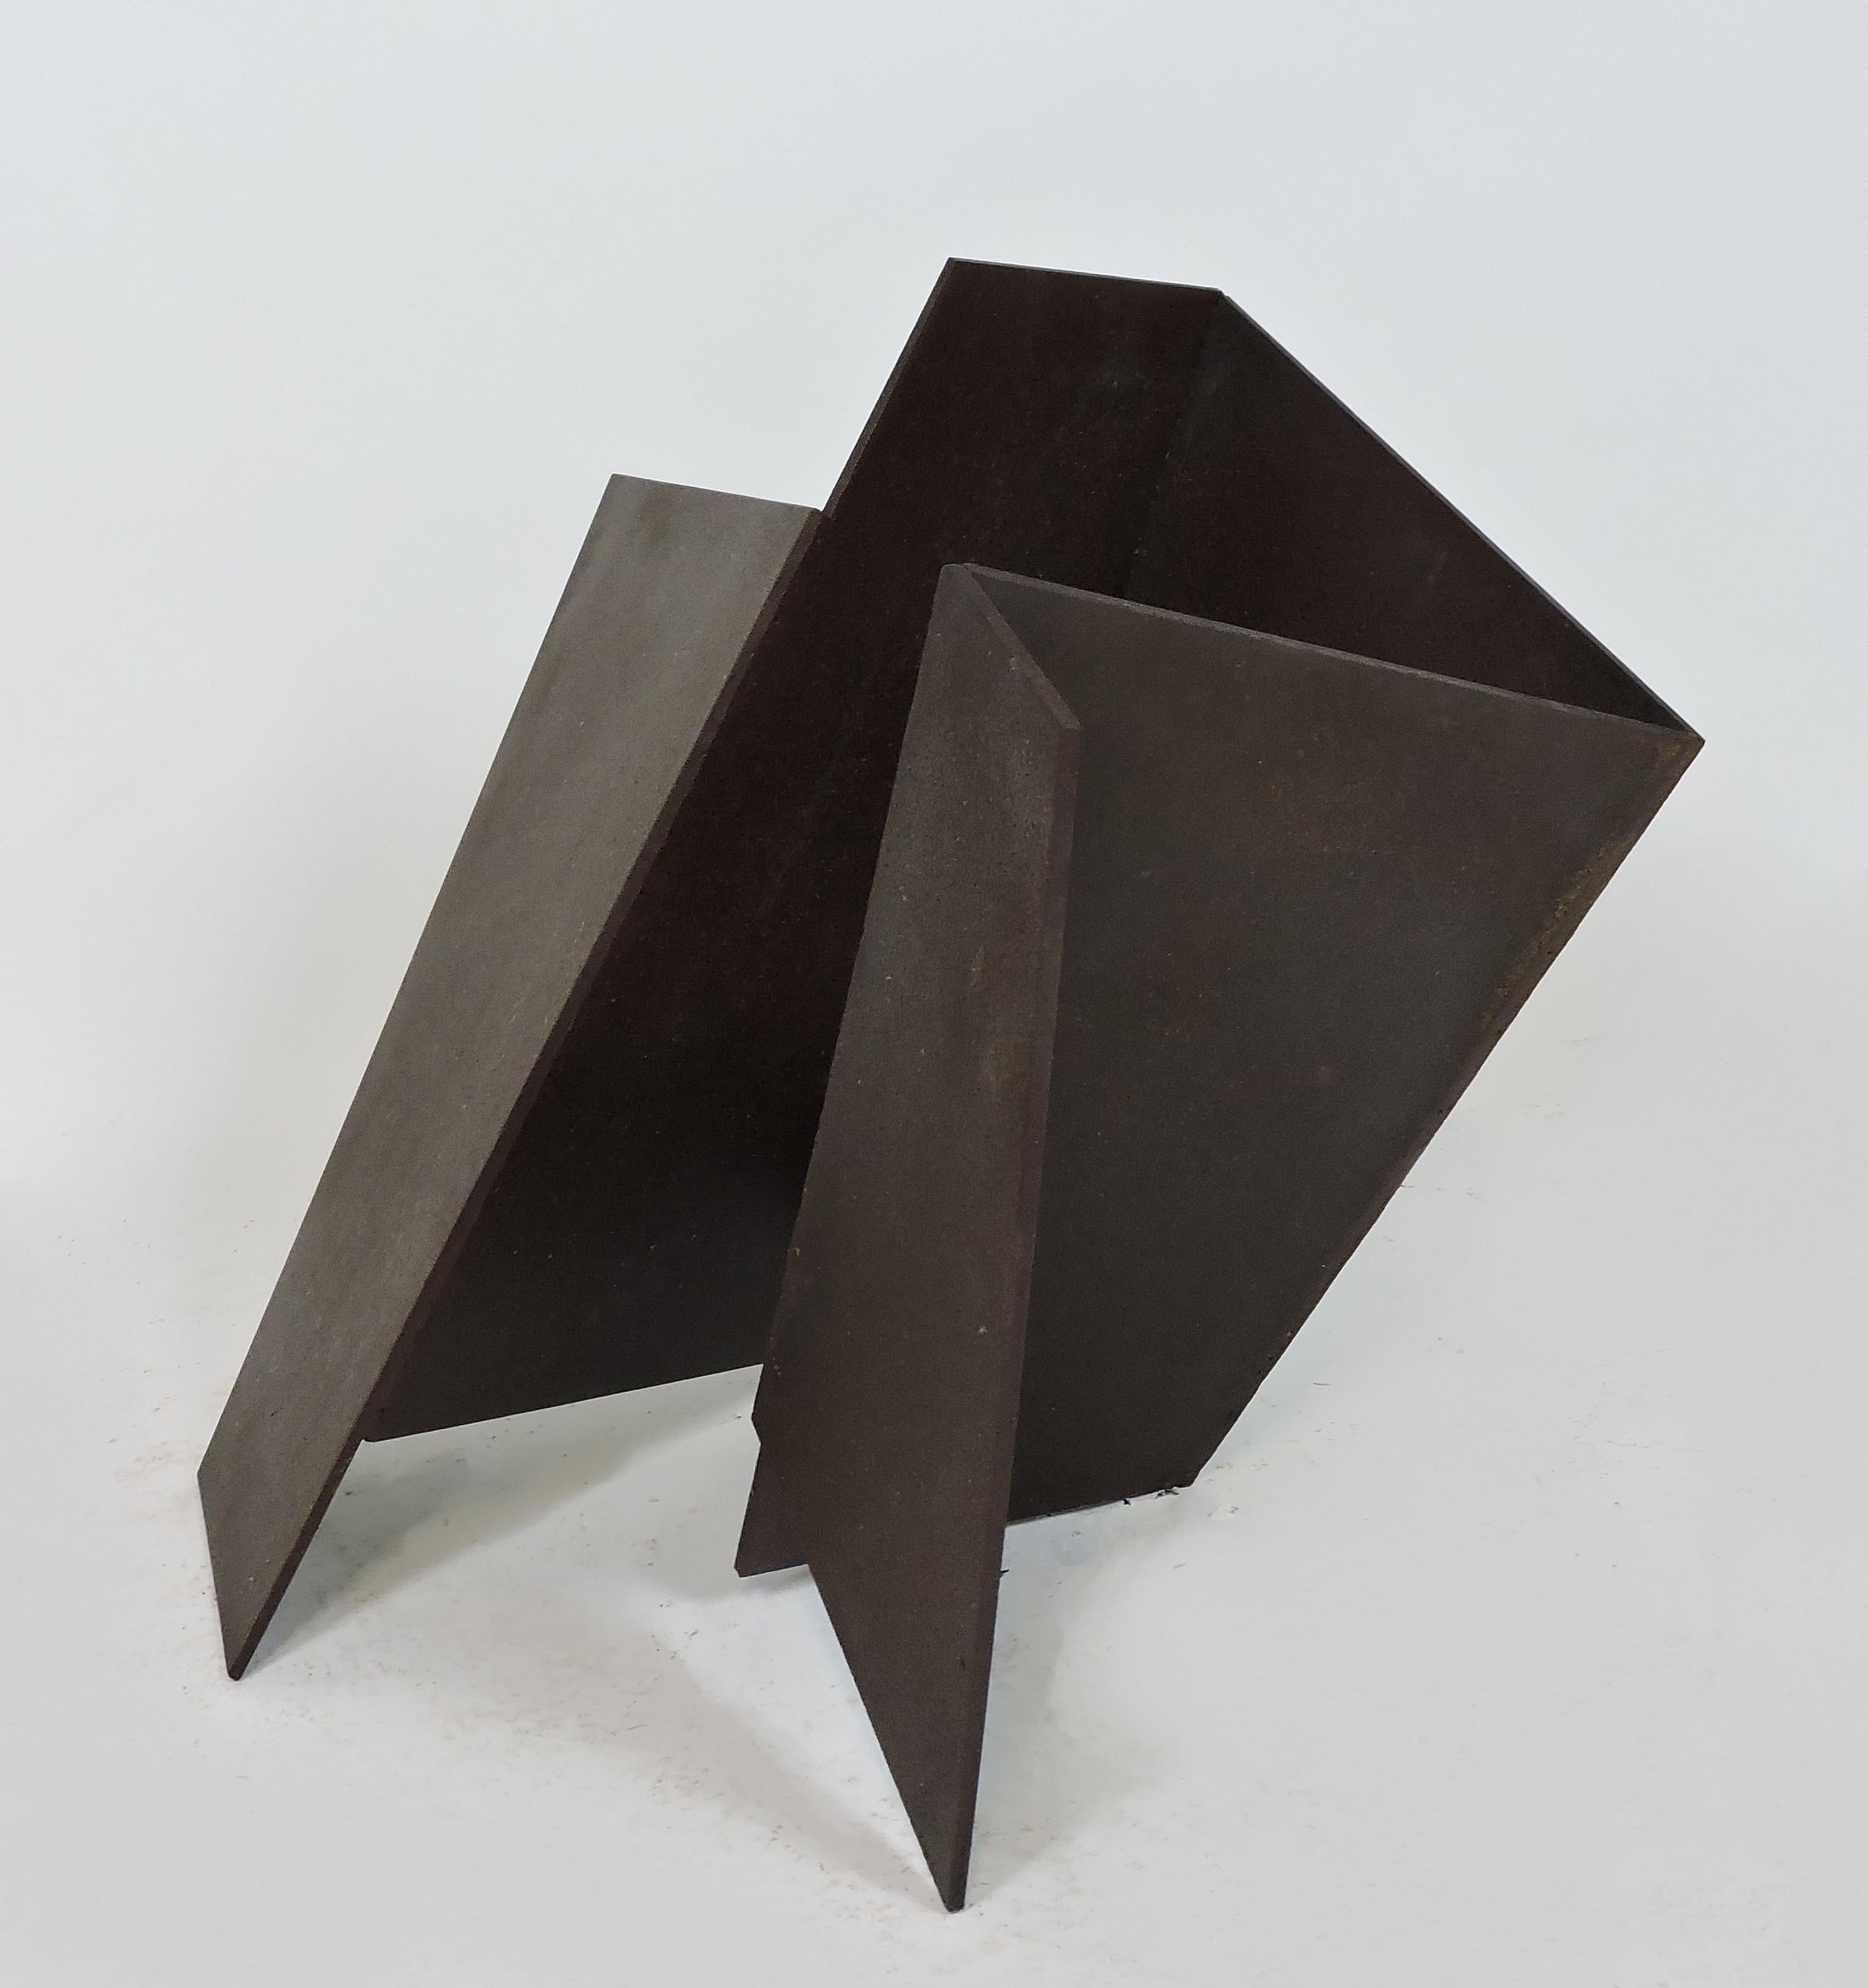 American Abstract Minimalist Welded Steel Sculpture 